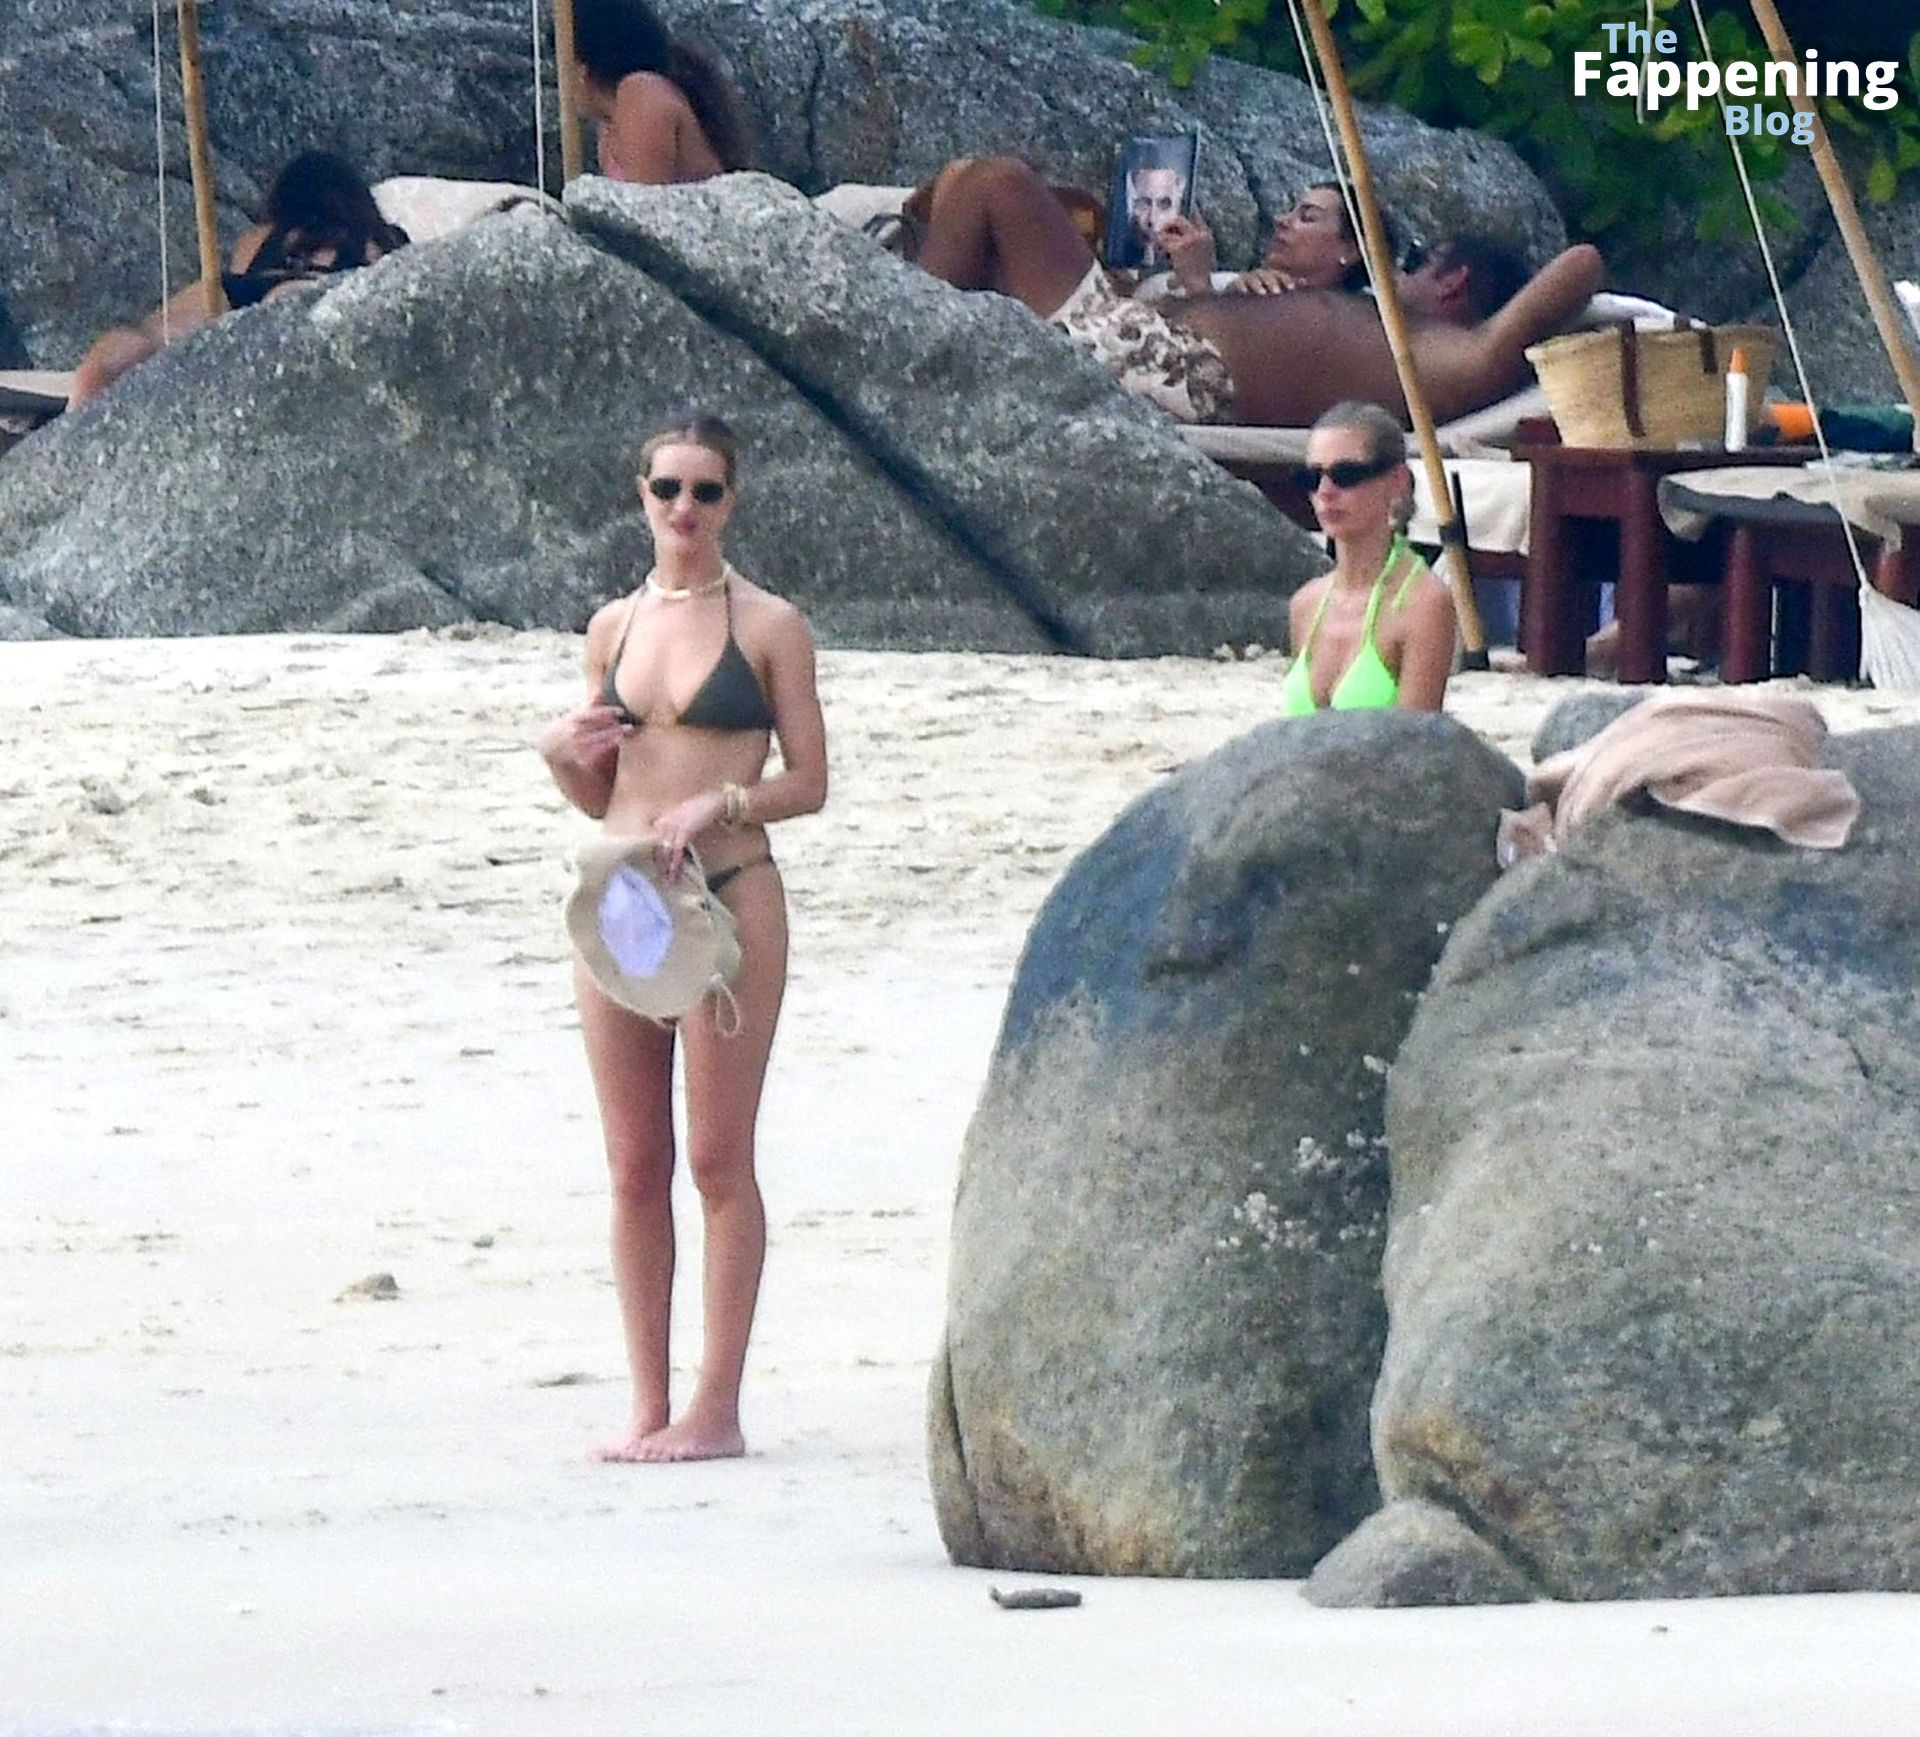 Rosie Huntington-Whiteley Shows Off Her Stunning Figure Wearing a Tiny Bikini (38 Photos)